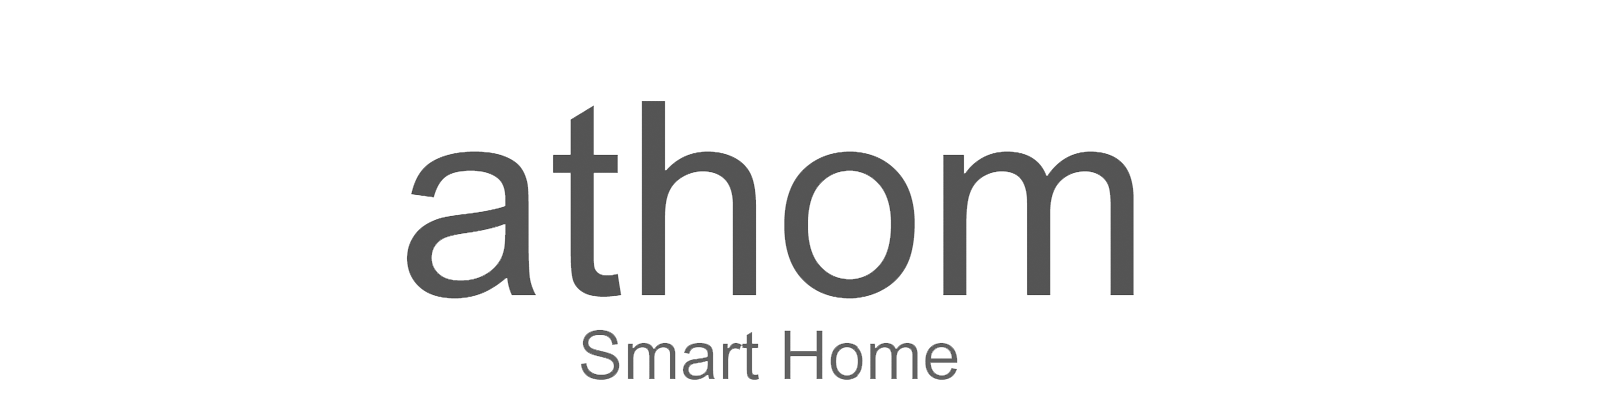 www-mediarath-de-smarthome-tasmota-athom-logo